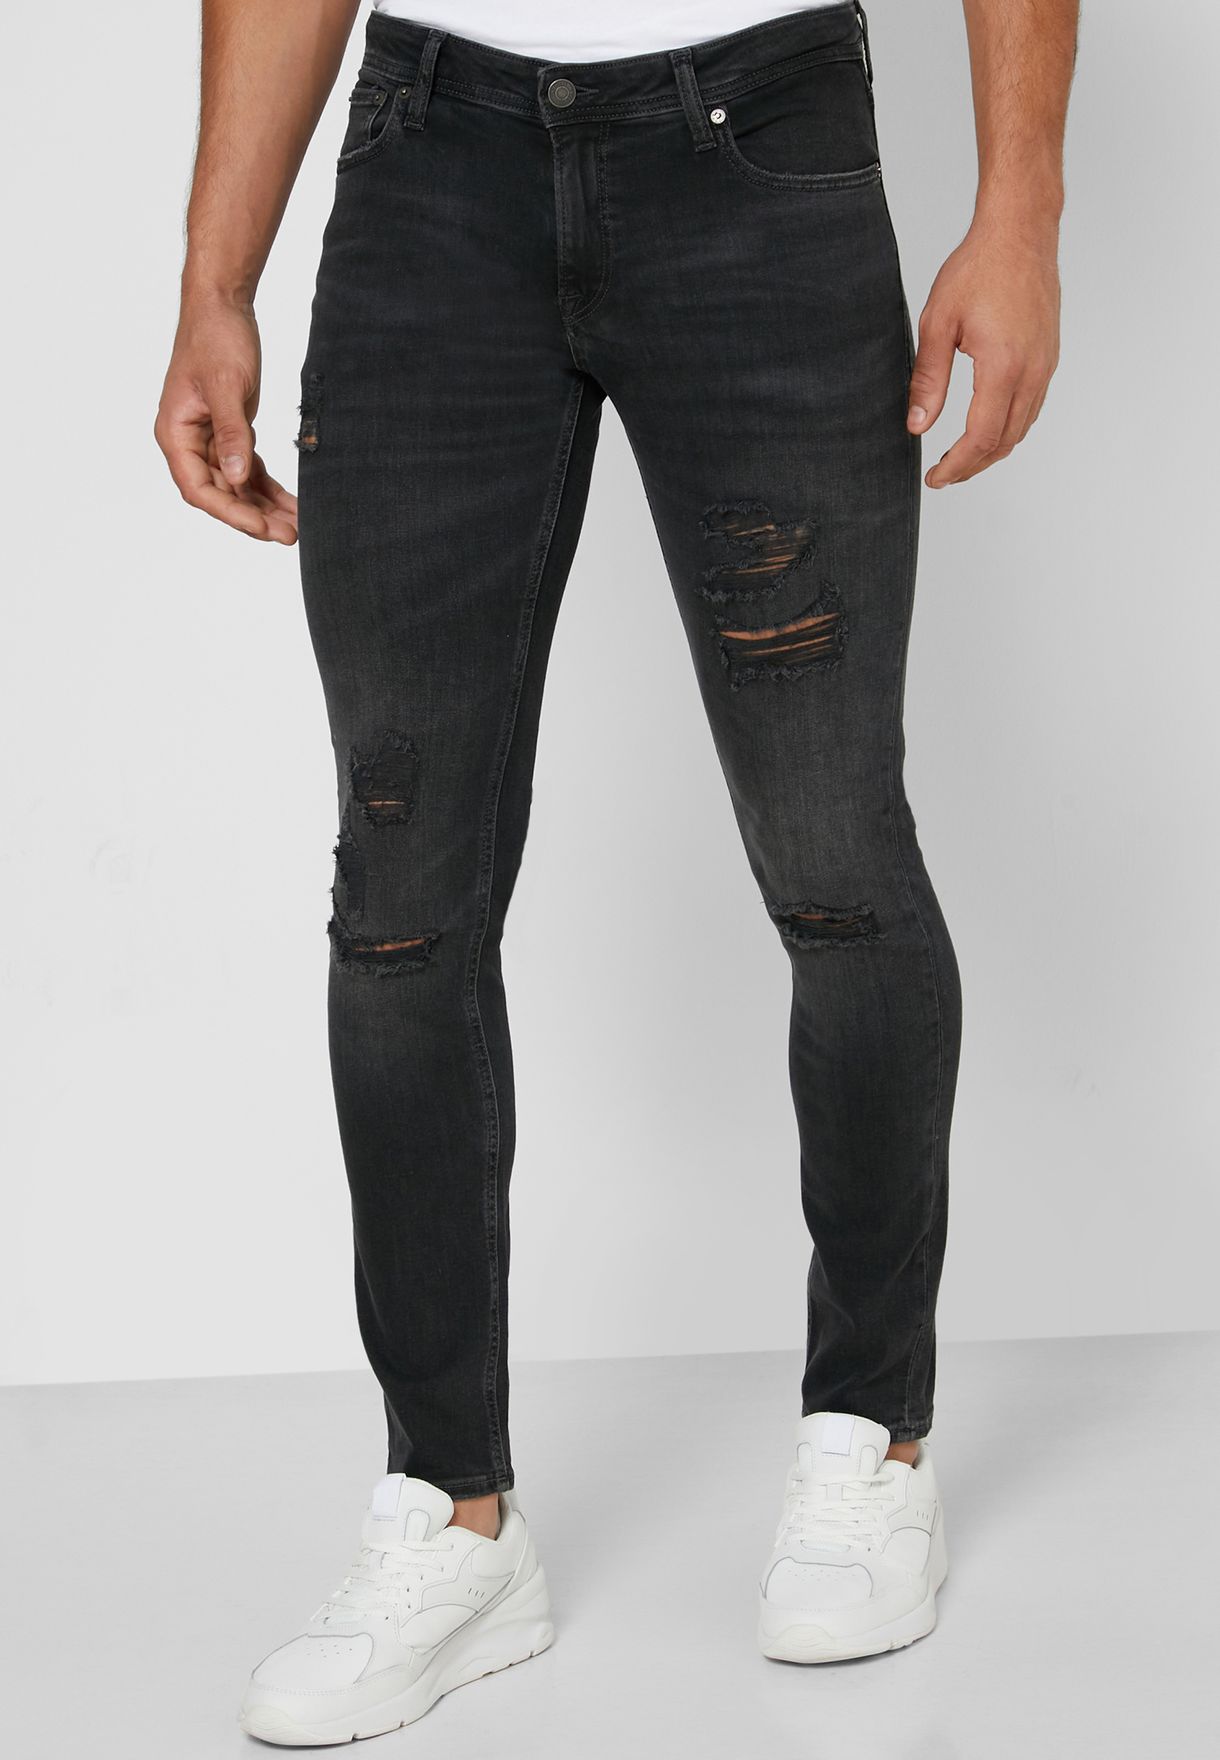 Buy > jack and jones liam jeans > in stock